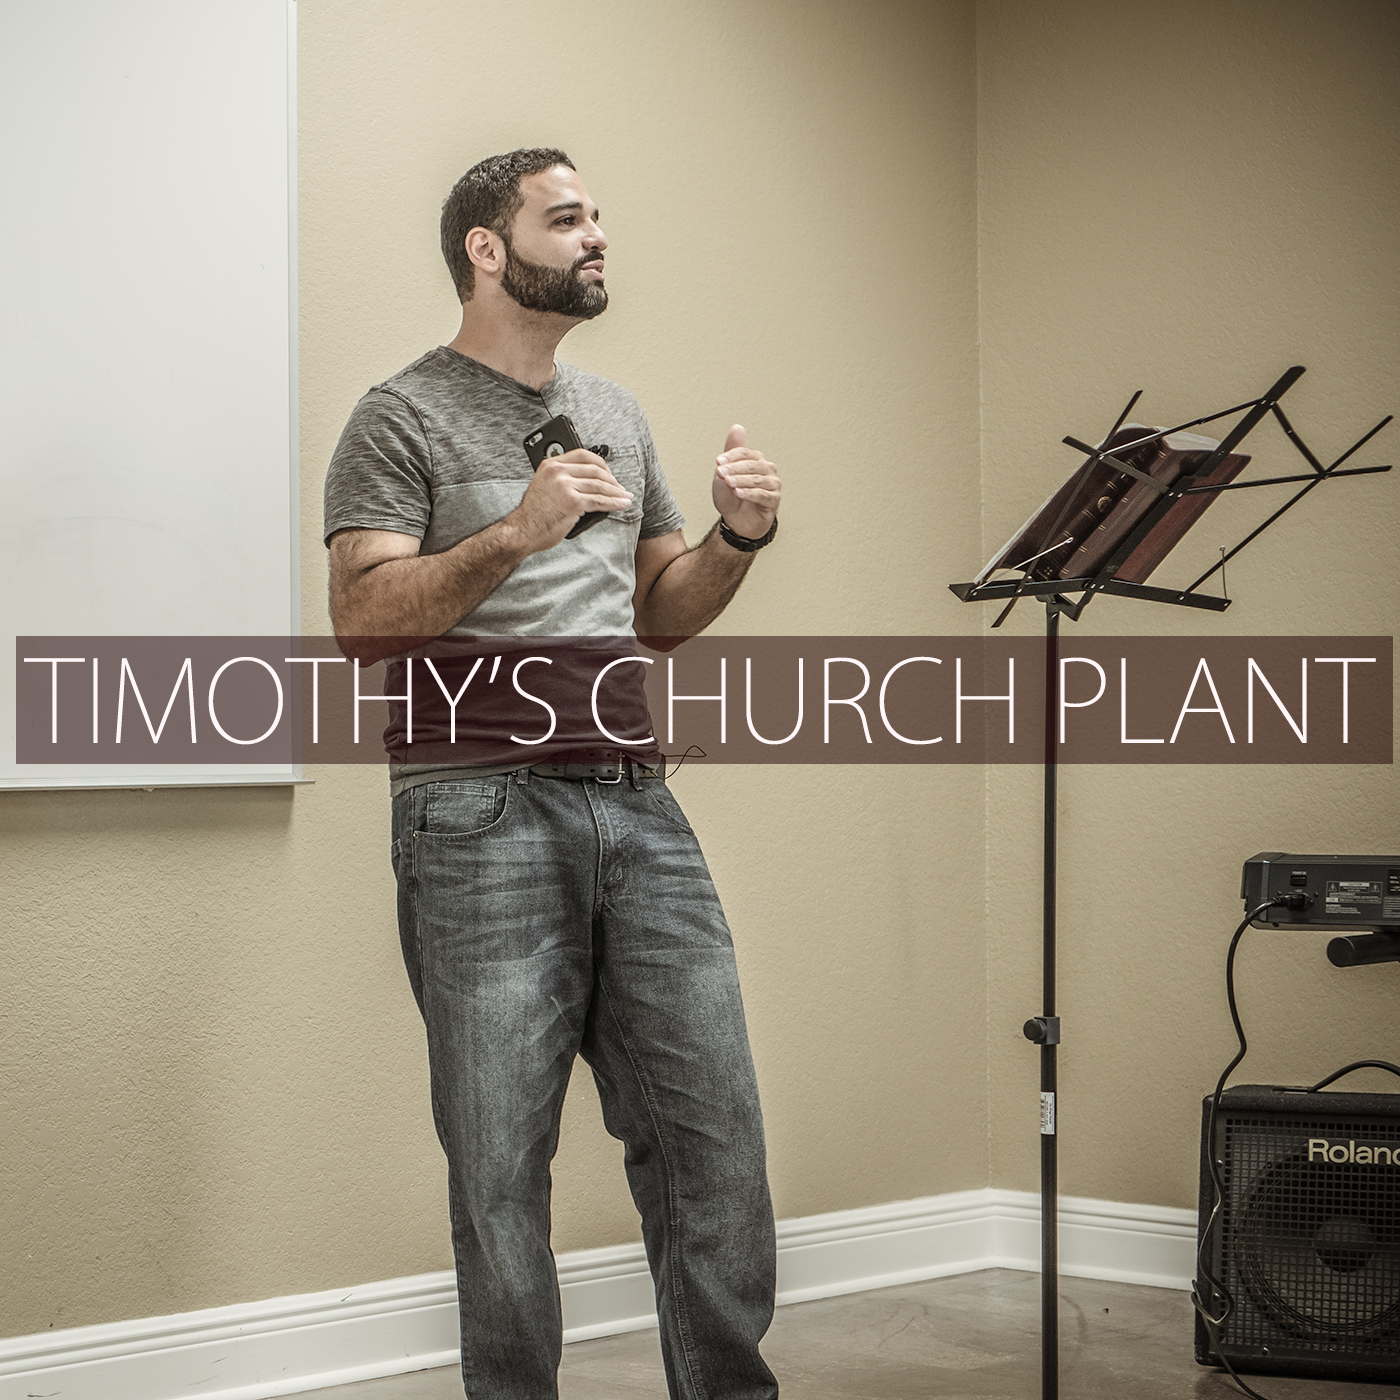 Timothy's Church Plant